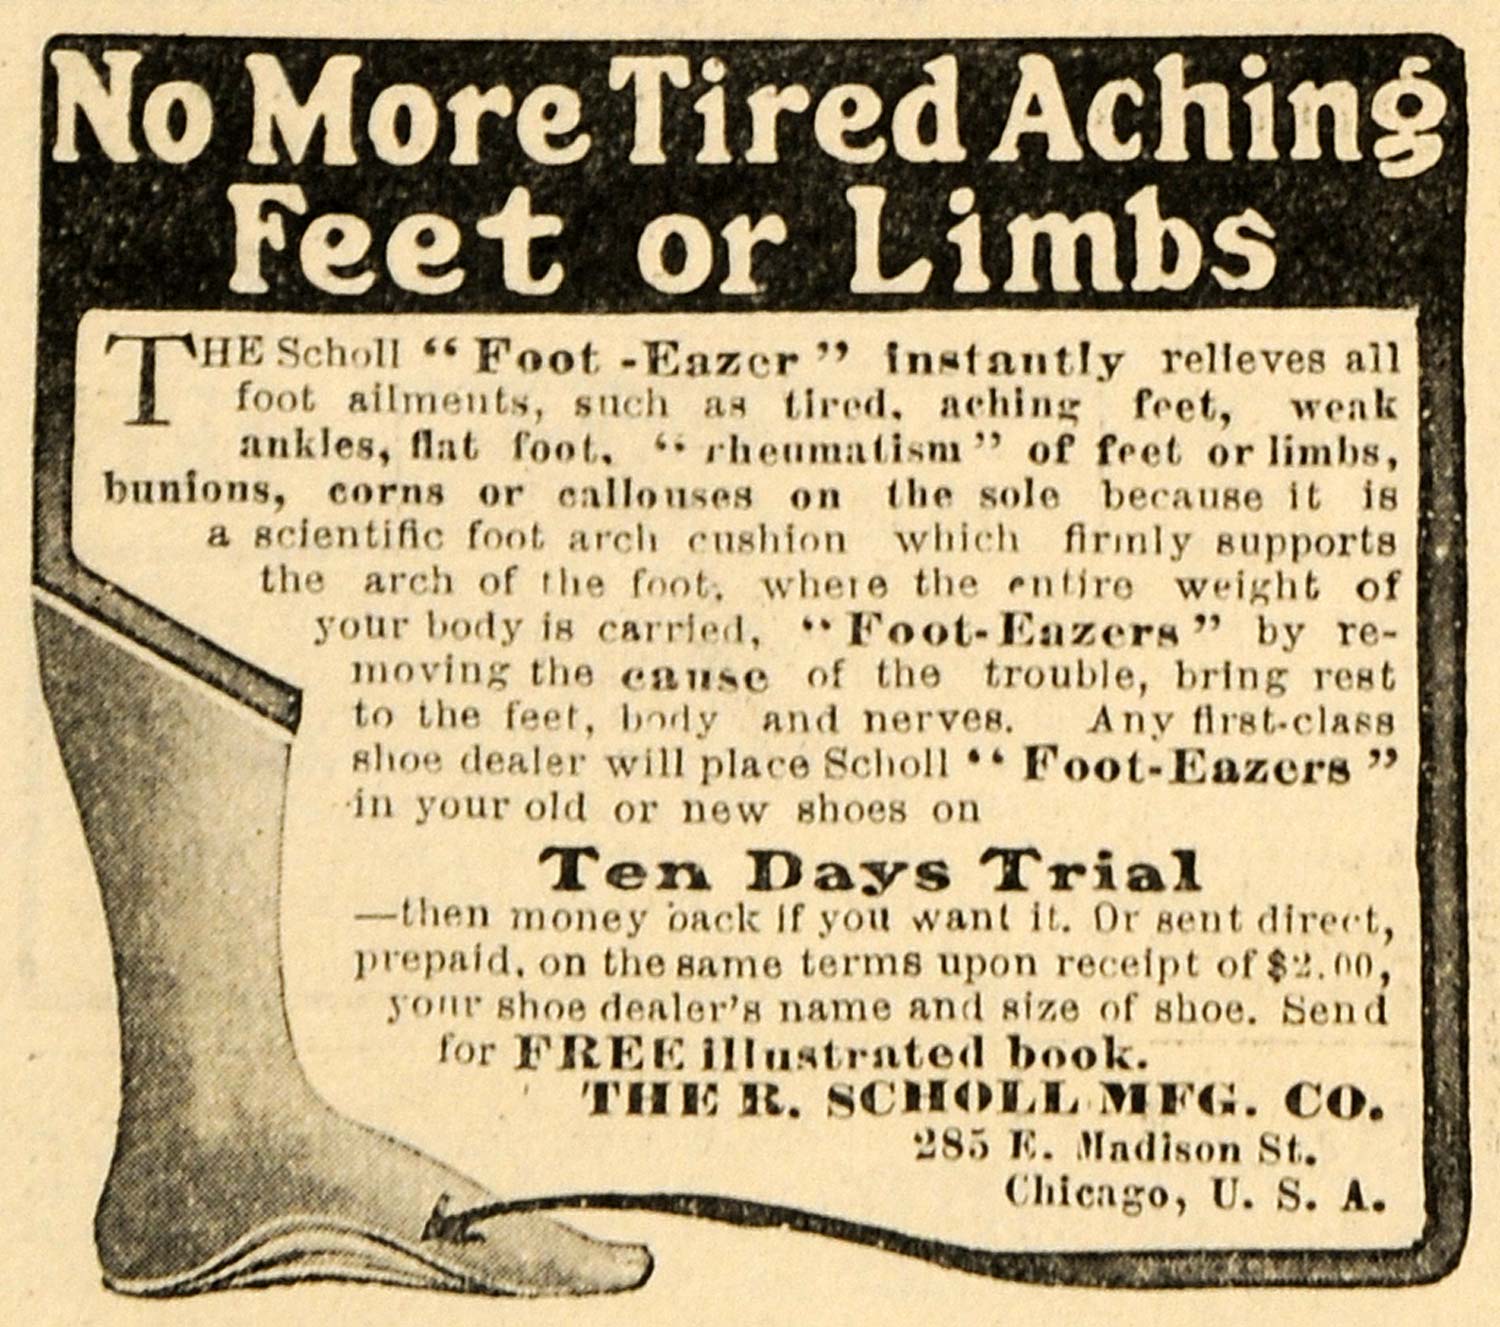 1910 Ad R Scholl Manufacturing Company Foot-Eazer Limbs - ORIGINAL MX5